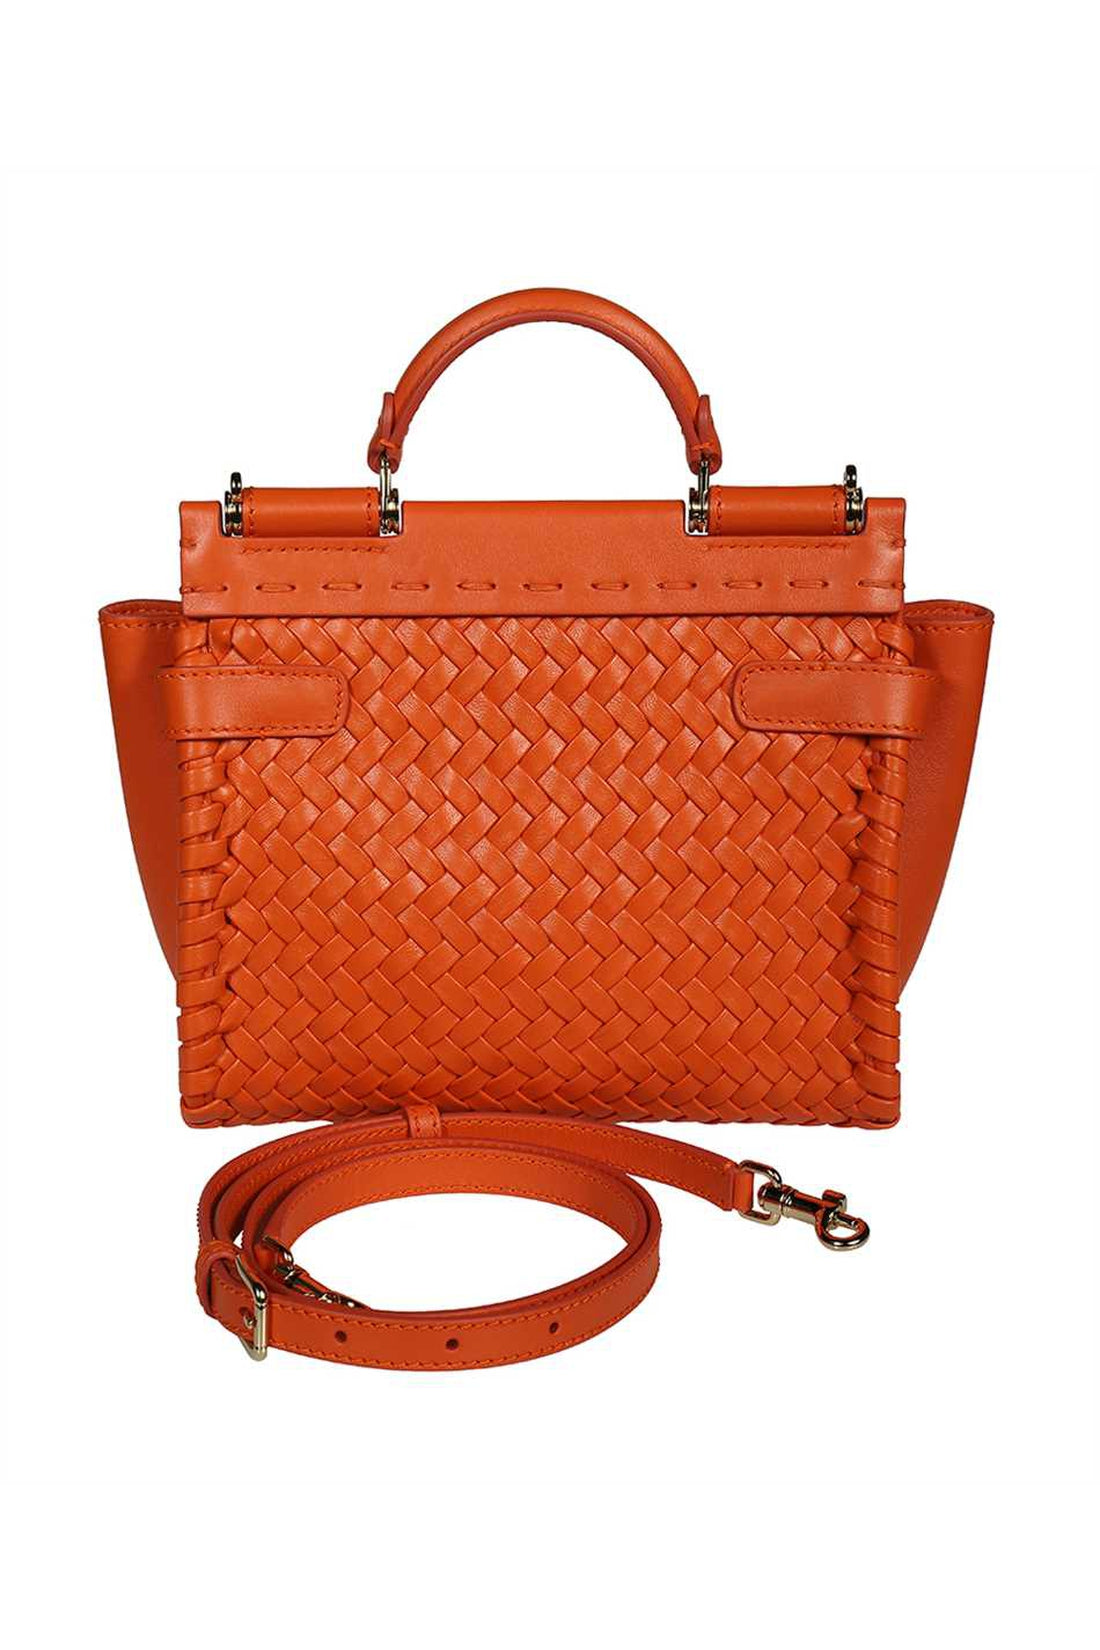 Dolce & Gabbana-OUTLET-SALE-Sicily 62 Soft handbag-ARCHIVIST